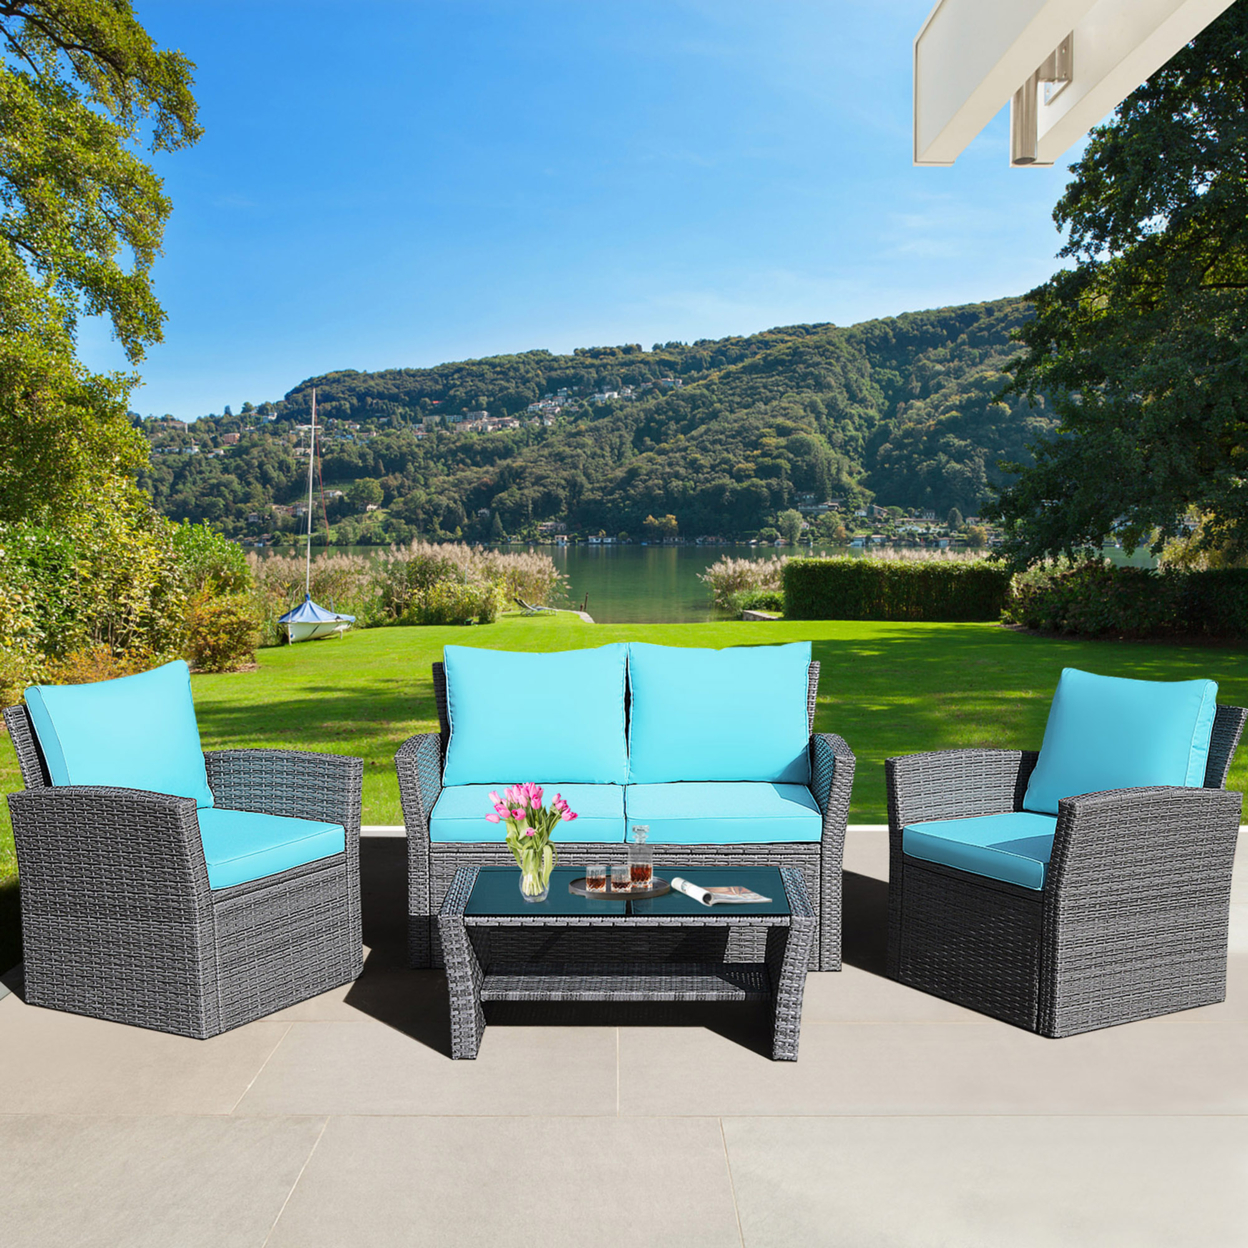 4PCS Patio Rattan Conversation Set Outdoor Furniture Set W/ Turquoise Cushions